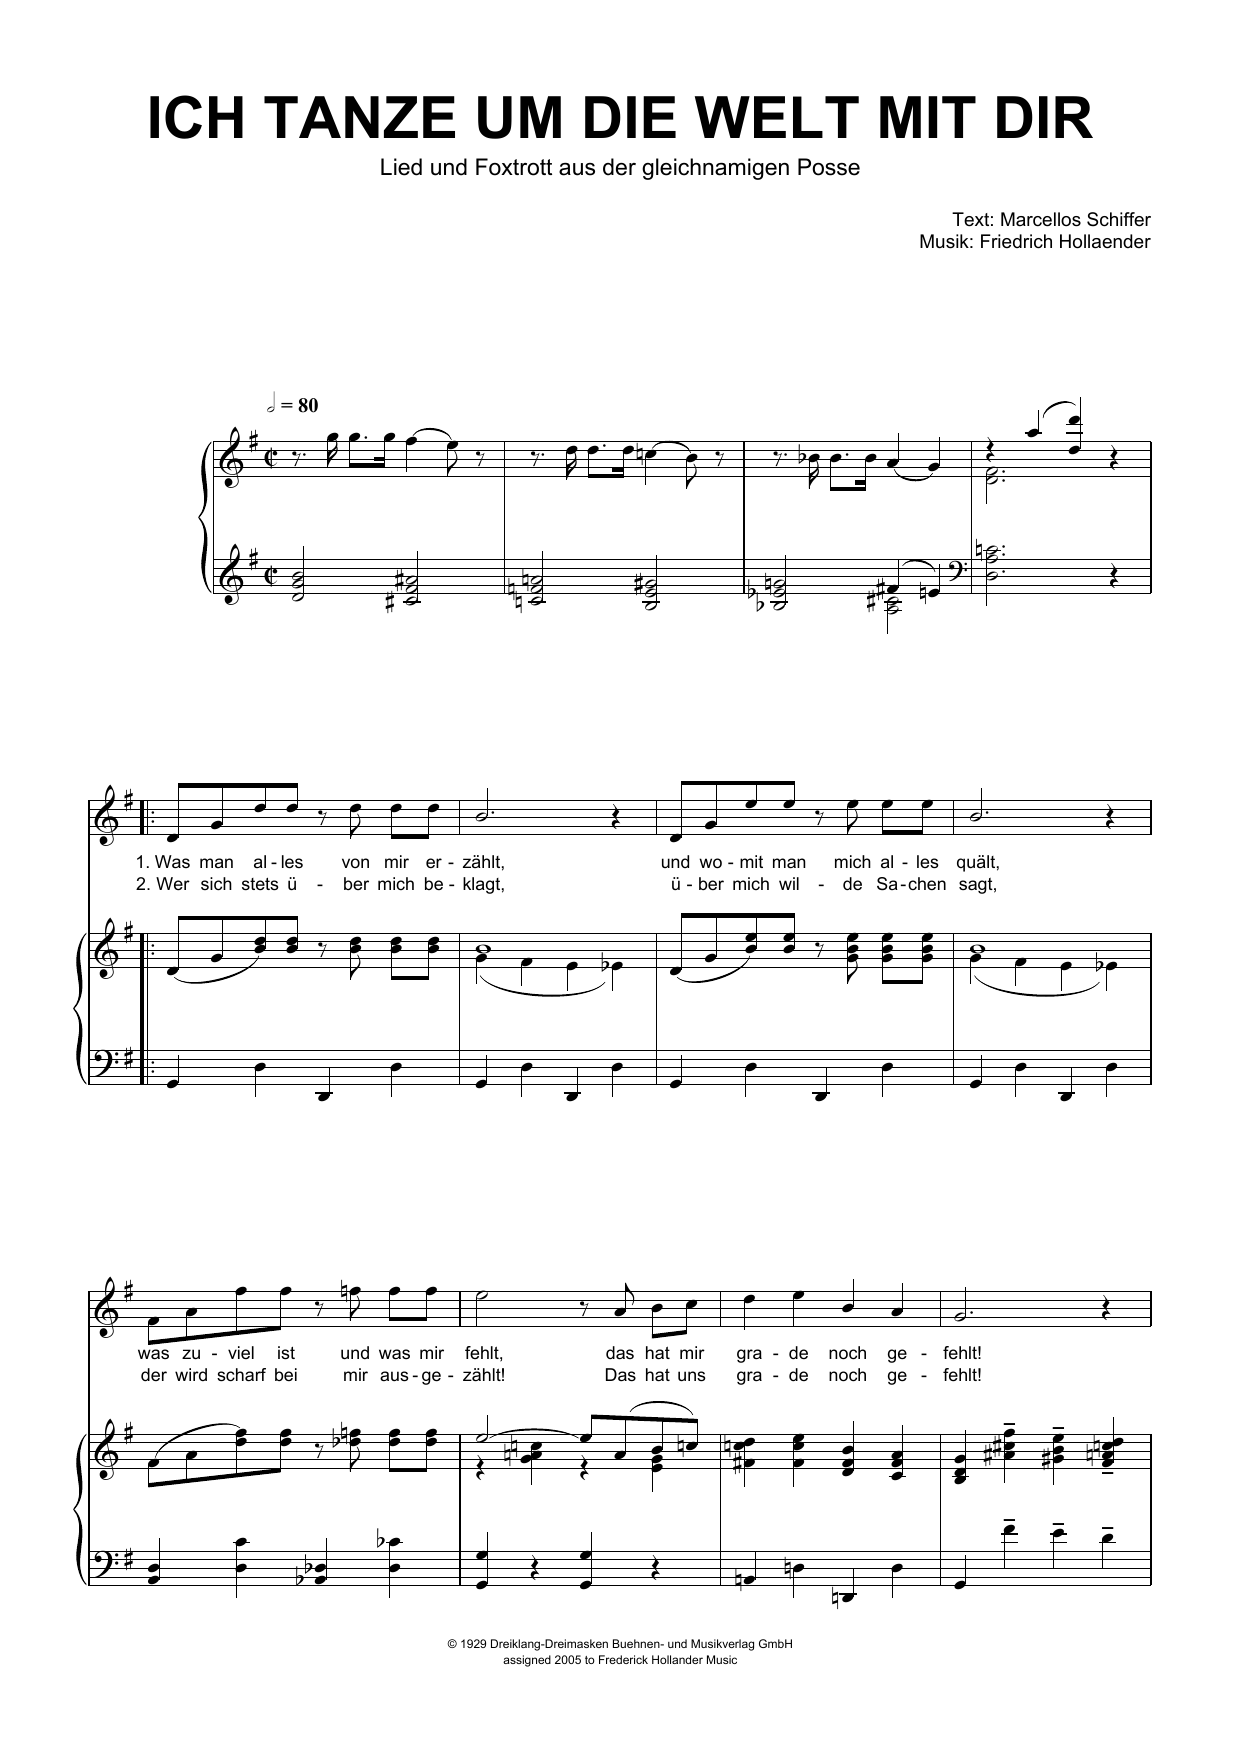 Download Friedrich Hollaender Ich Tanze Um Die Welt Mit Dir Sheet Music and learn how to play Piano & Vocal PDF digital score in minutes